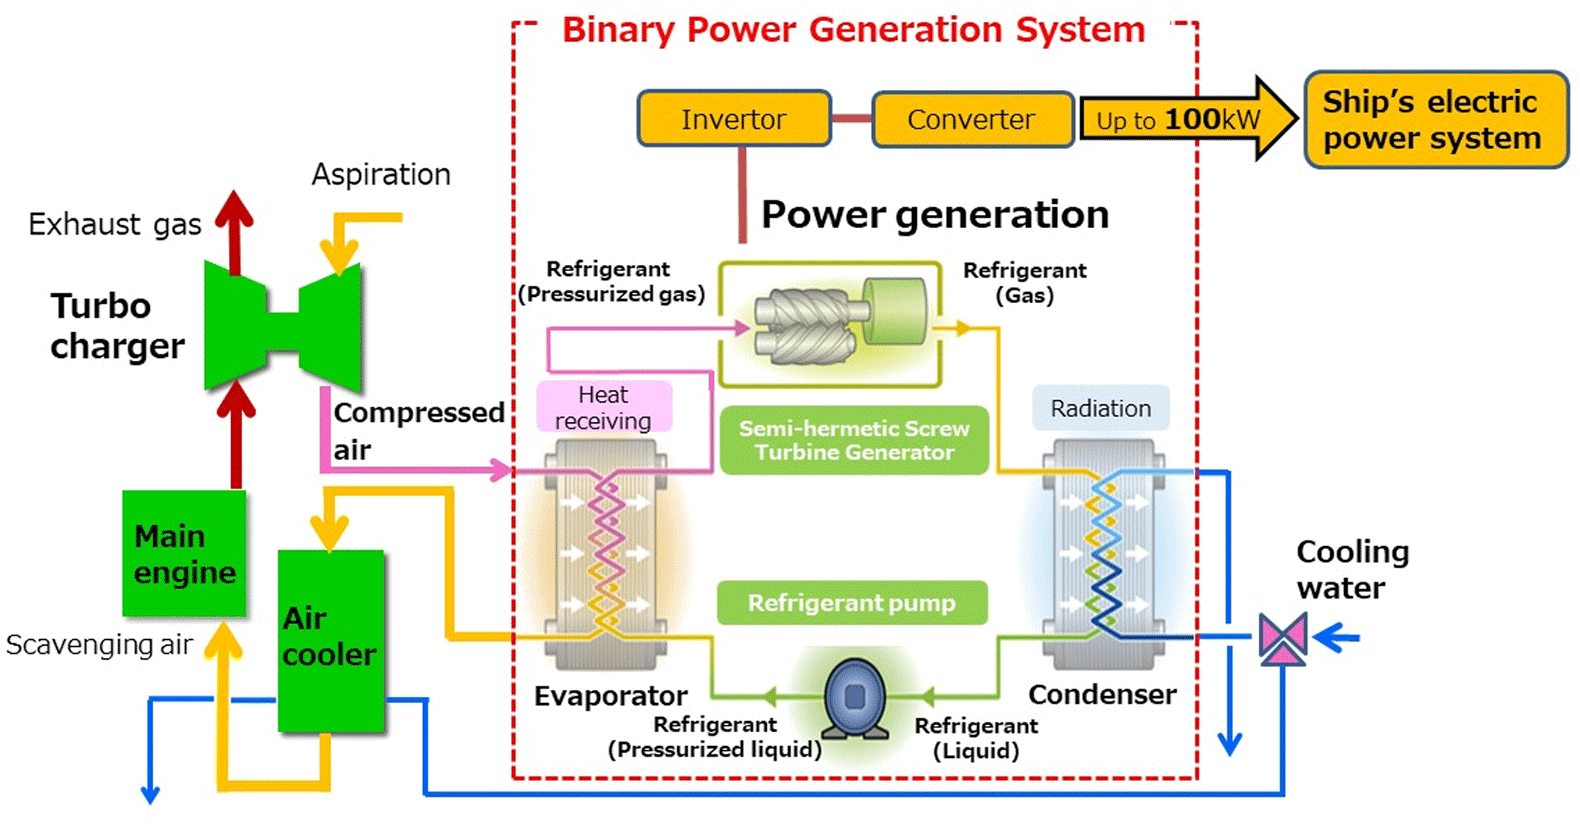 System generation